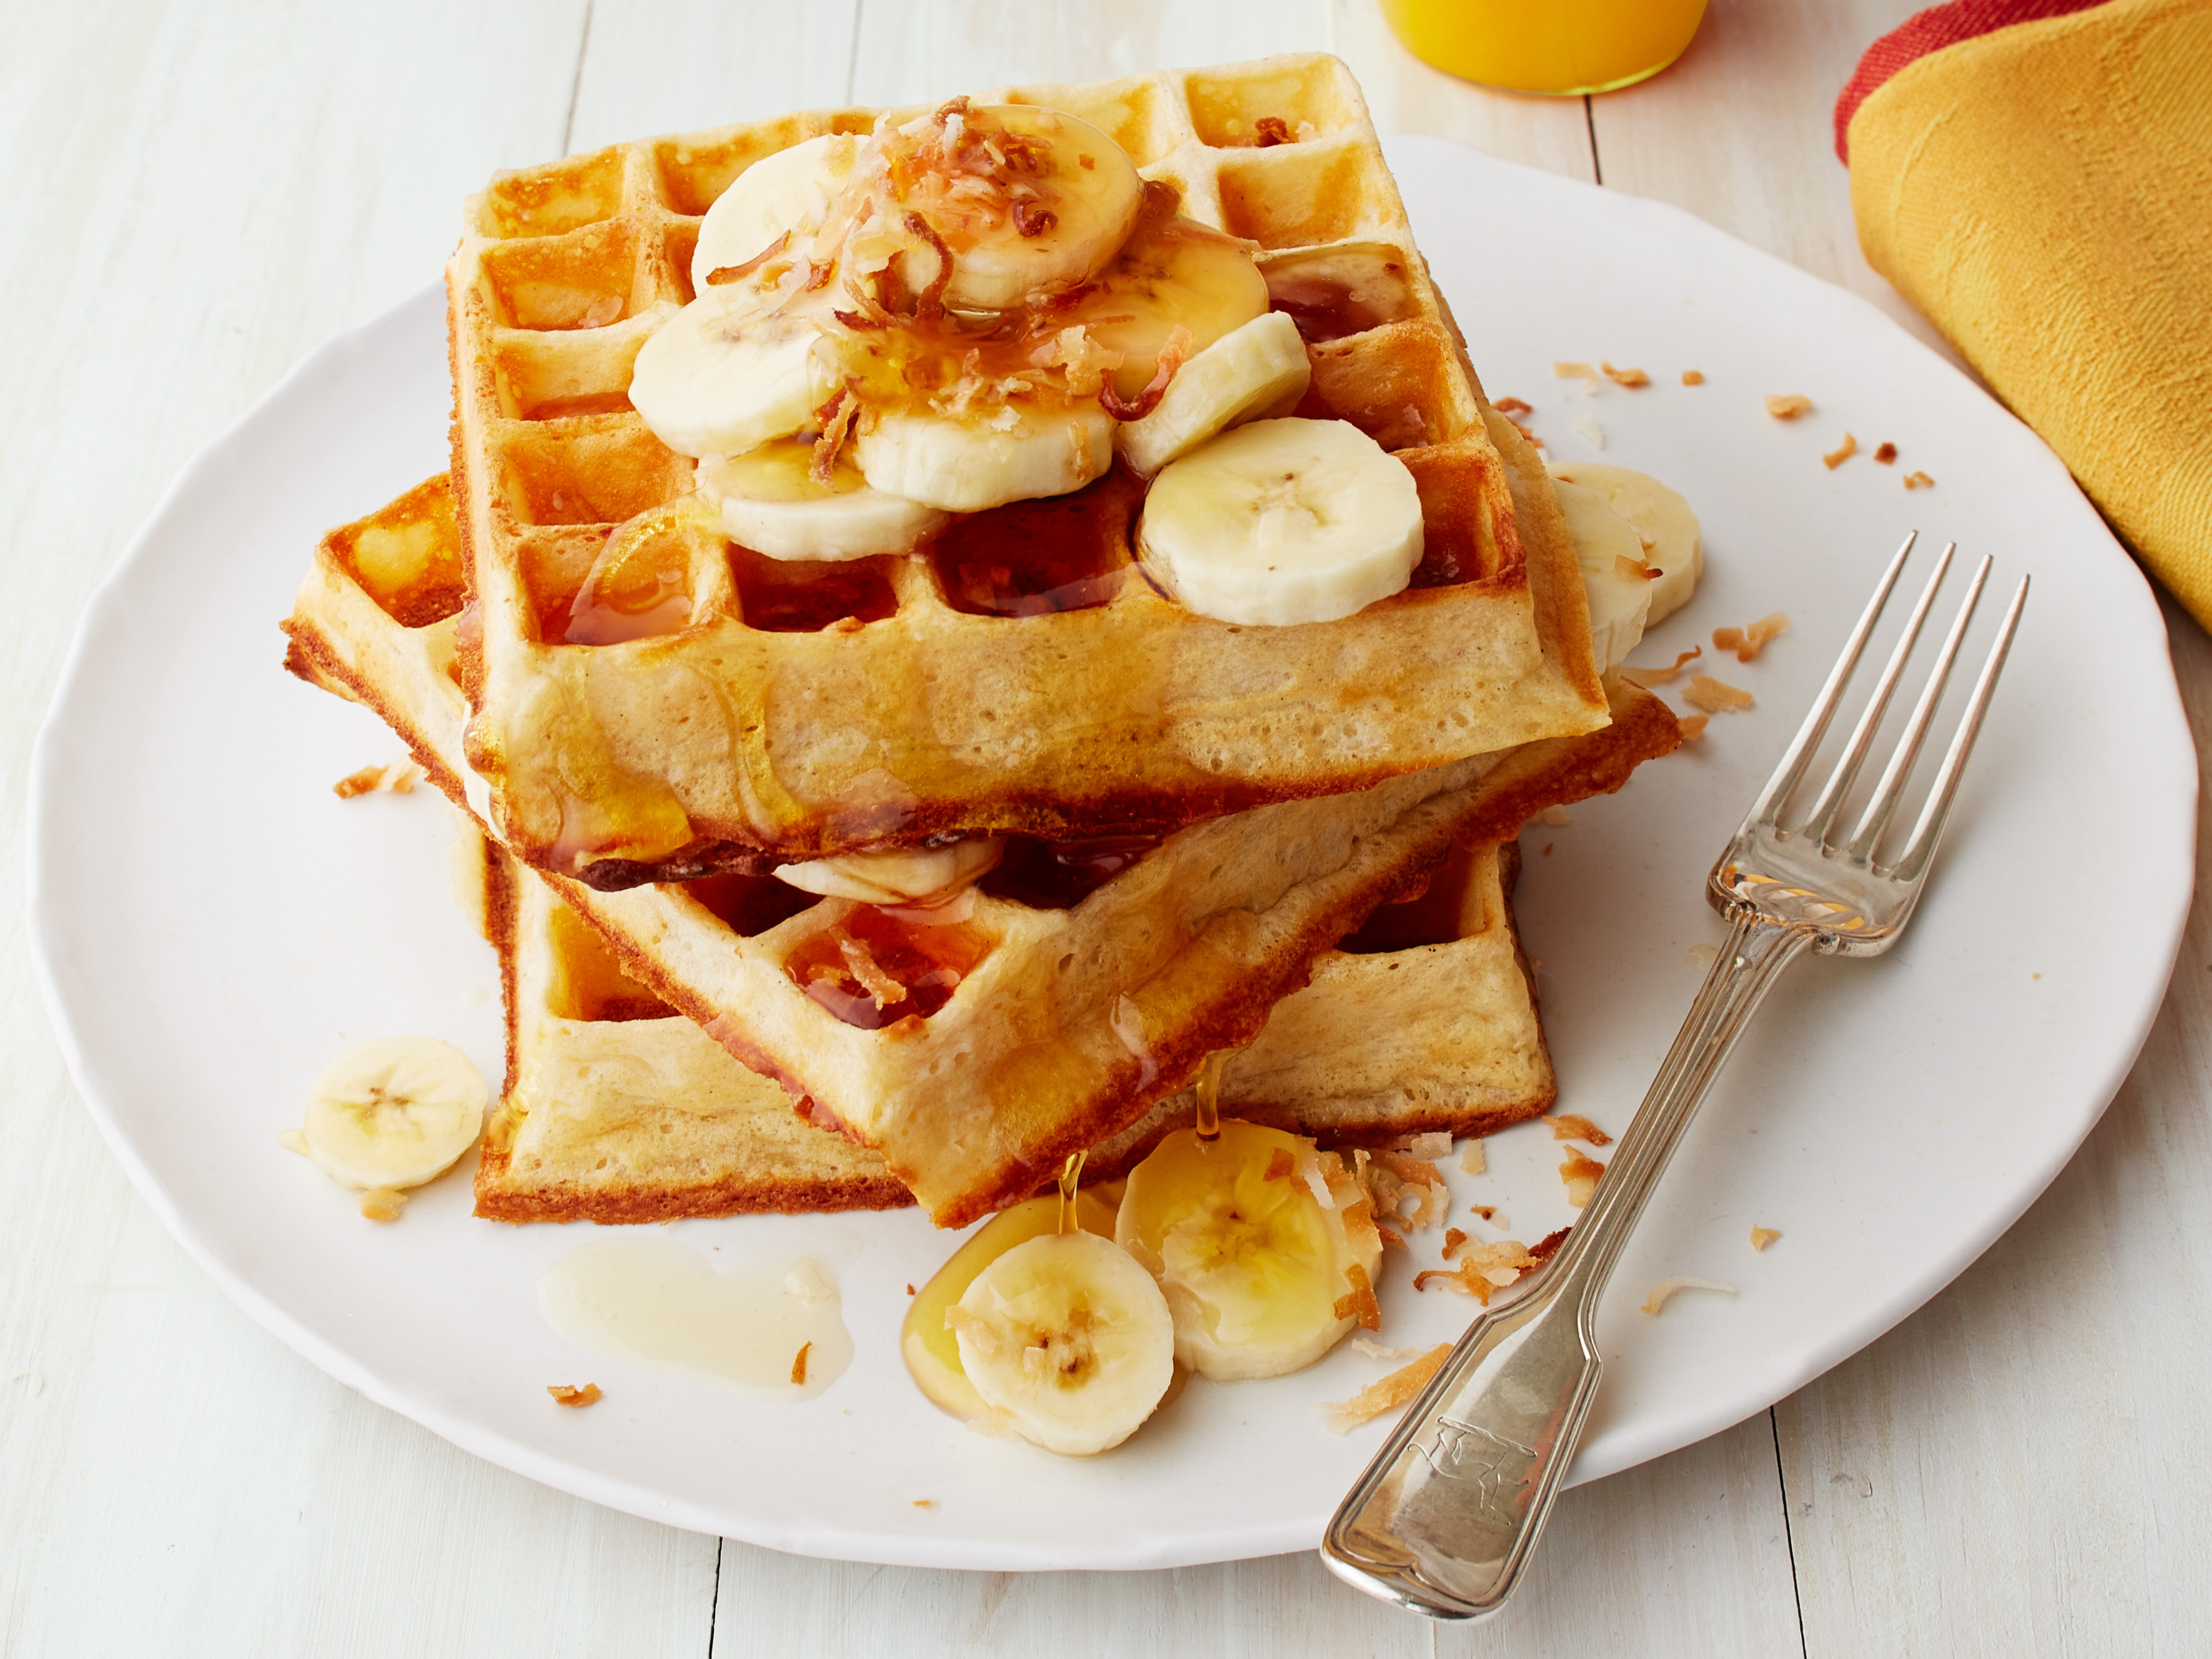 https://www.foodnetwork.com/content/dam/images/food/fullset/2015/3/2/2/FNM_040115-Overnight-Belgian-Waffles-Recipe_s4x3.jpg